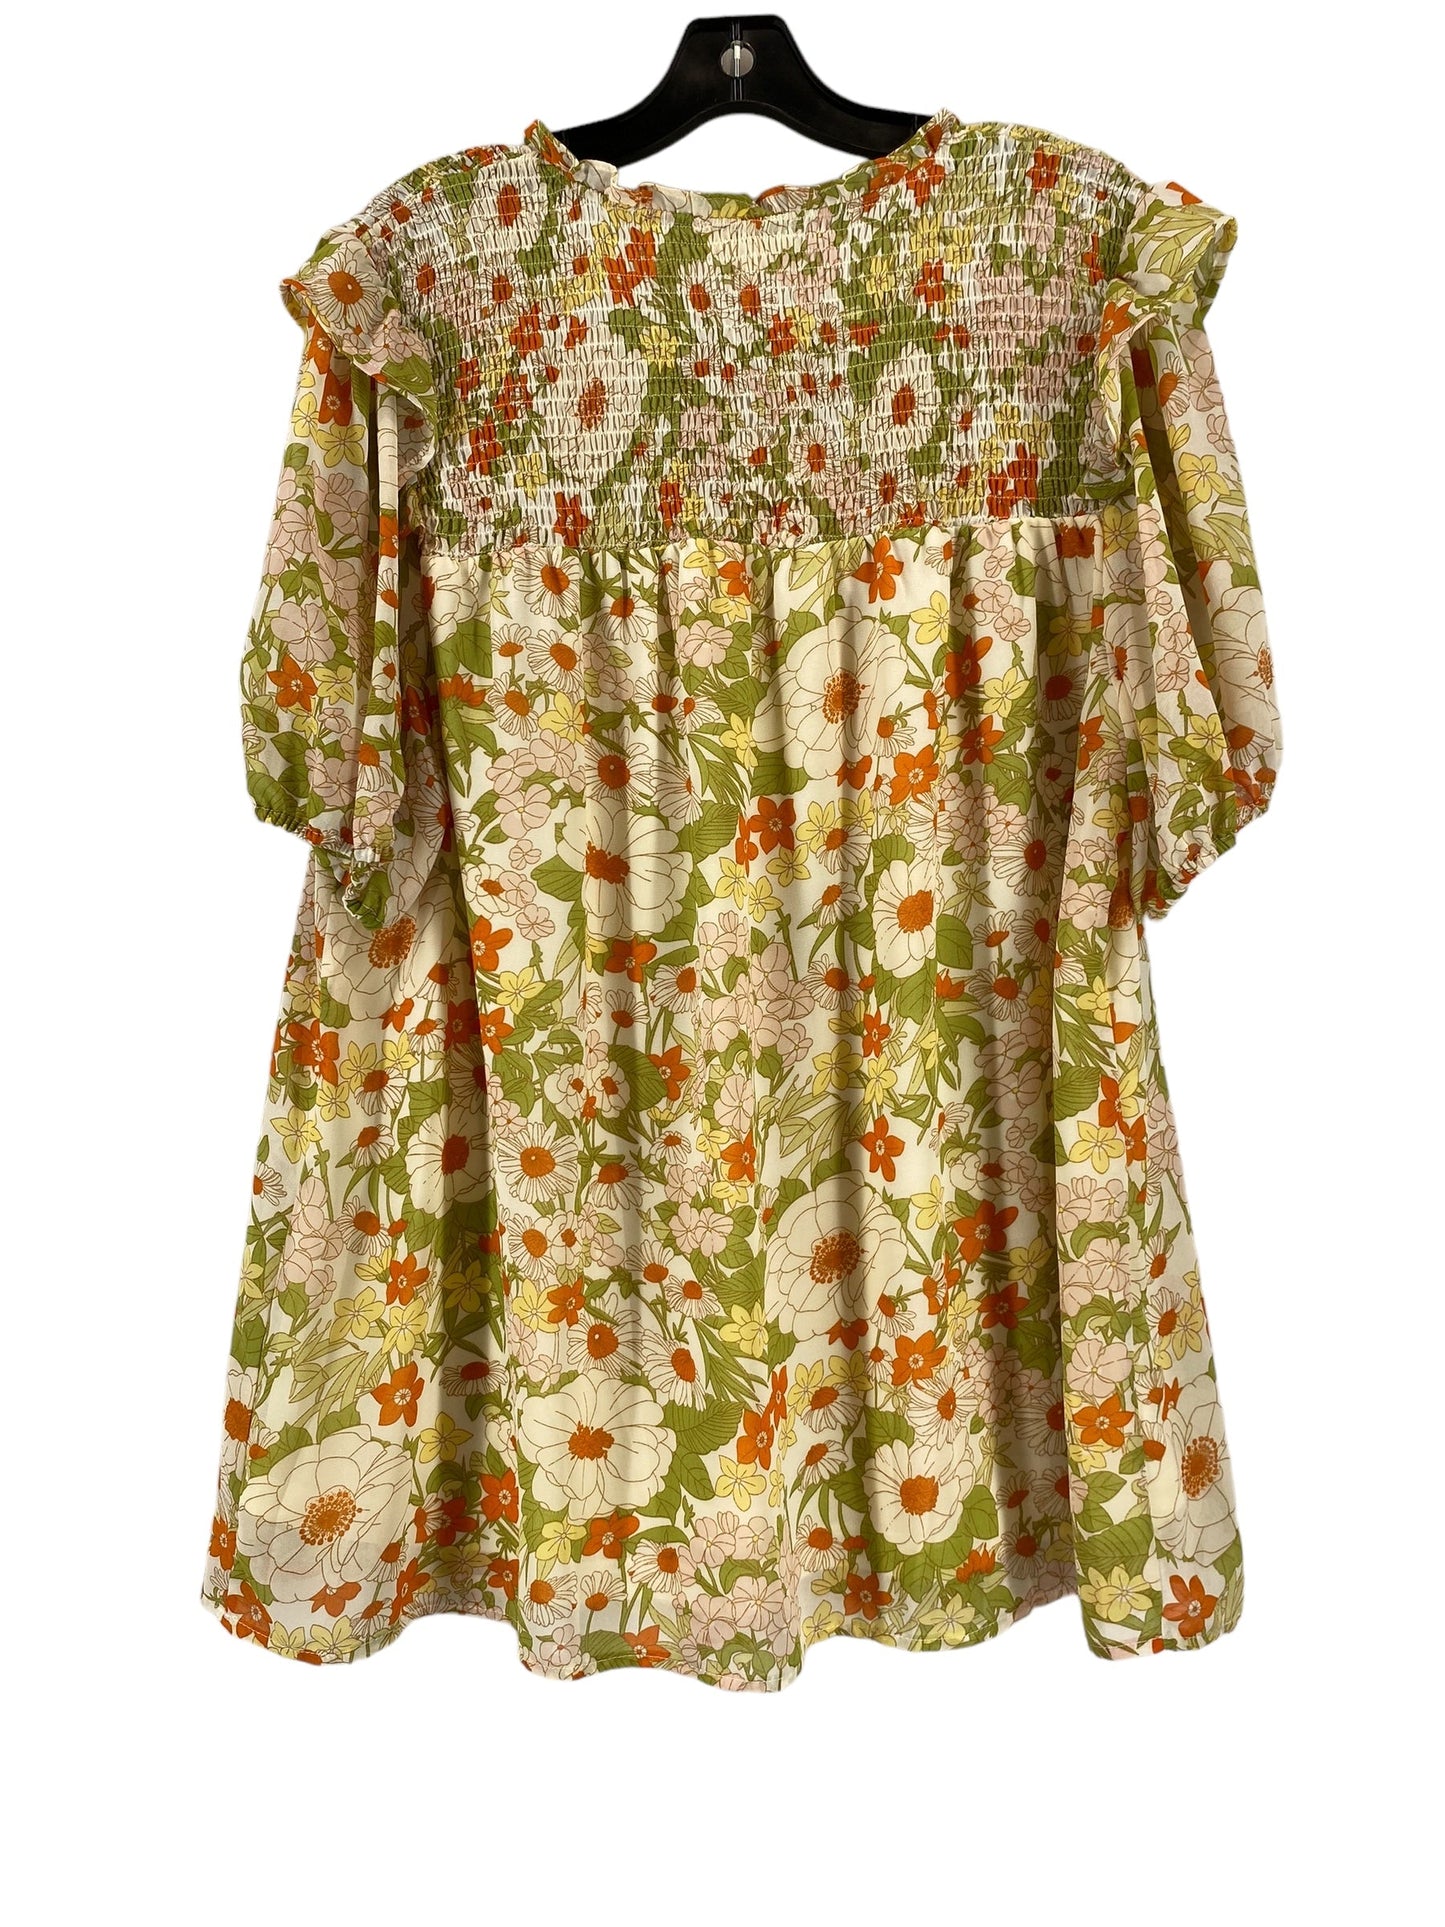 Floral Print Dress Casual Short Entro, Size 1x